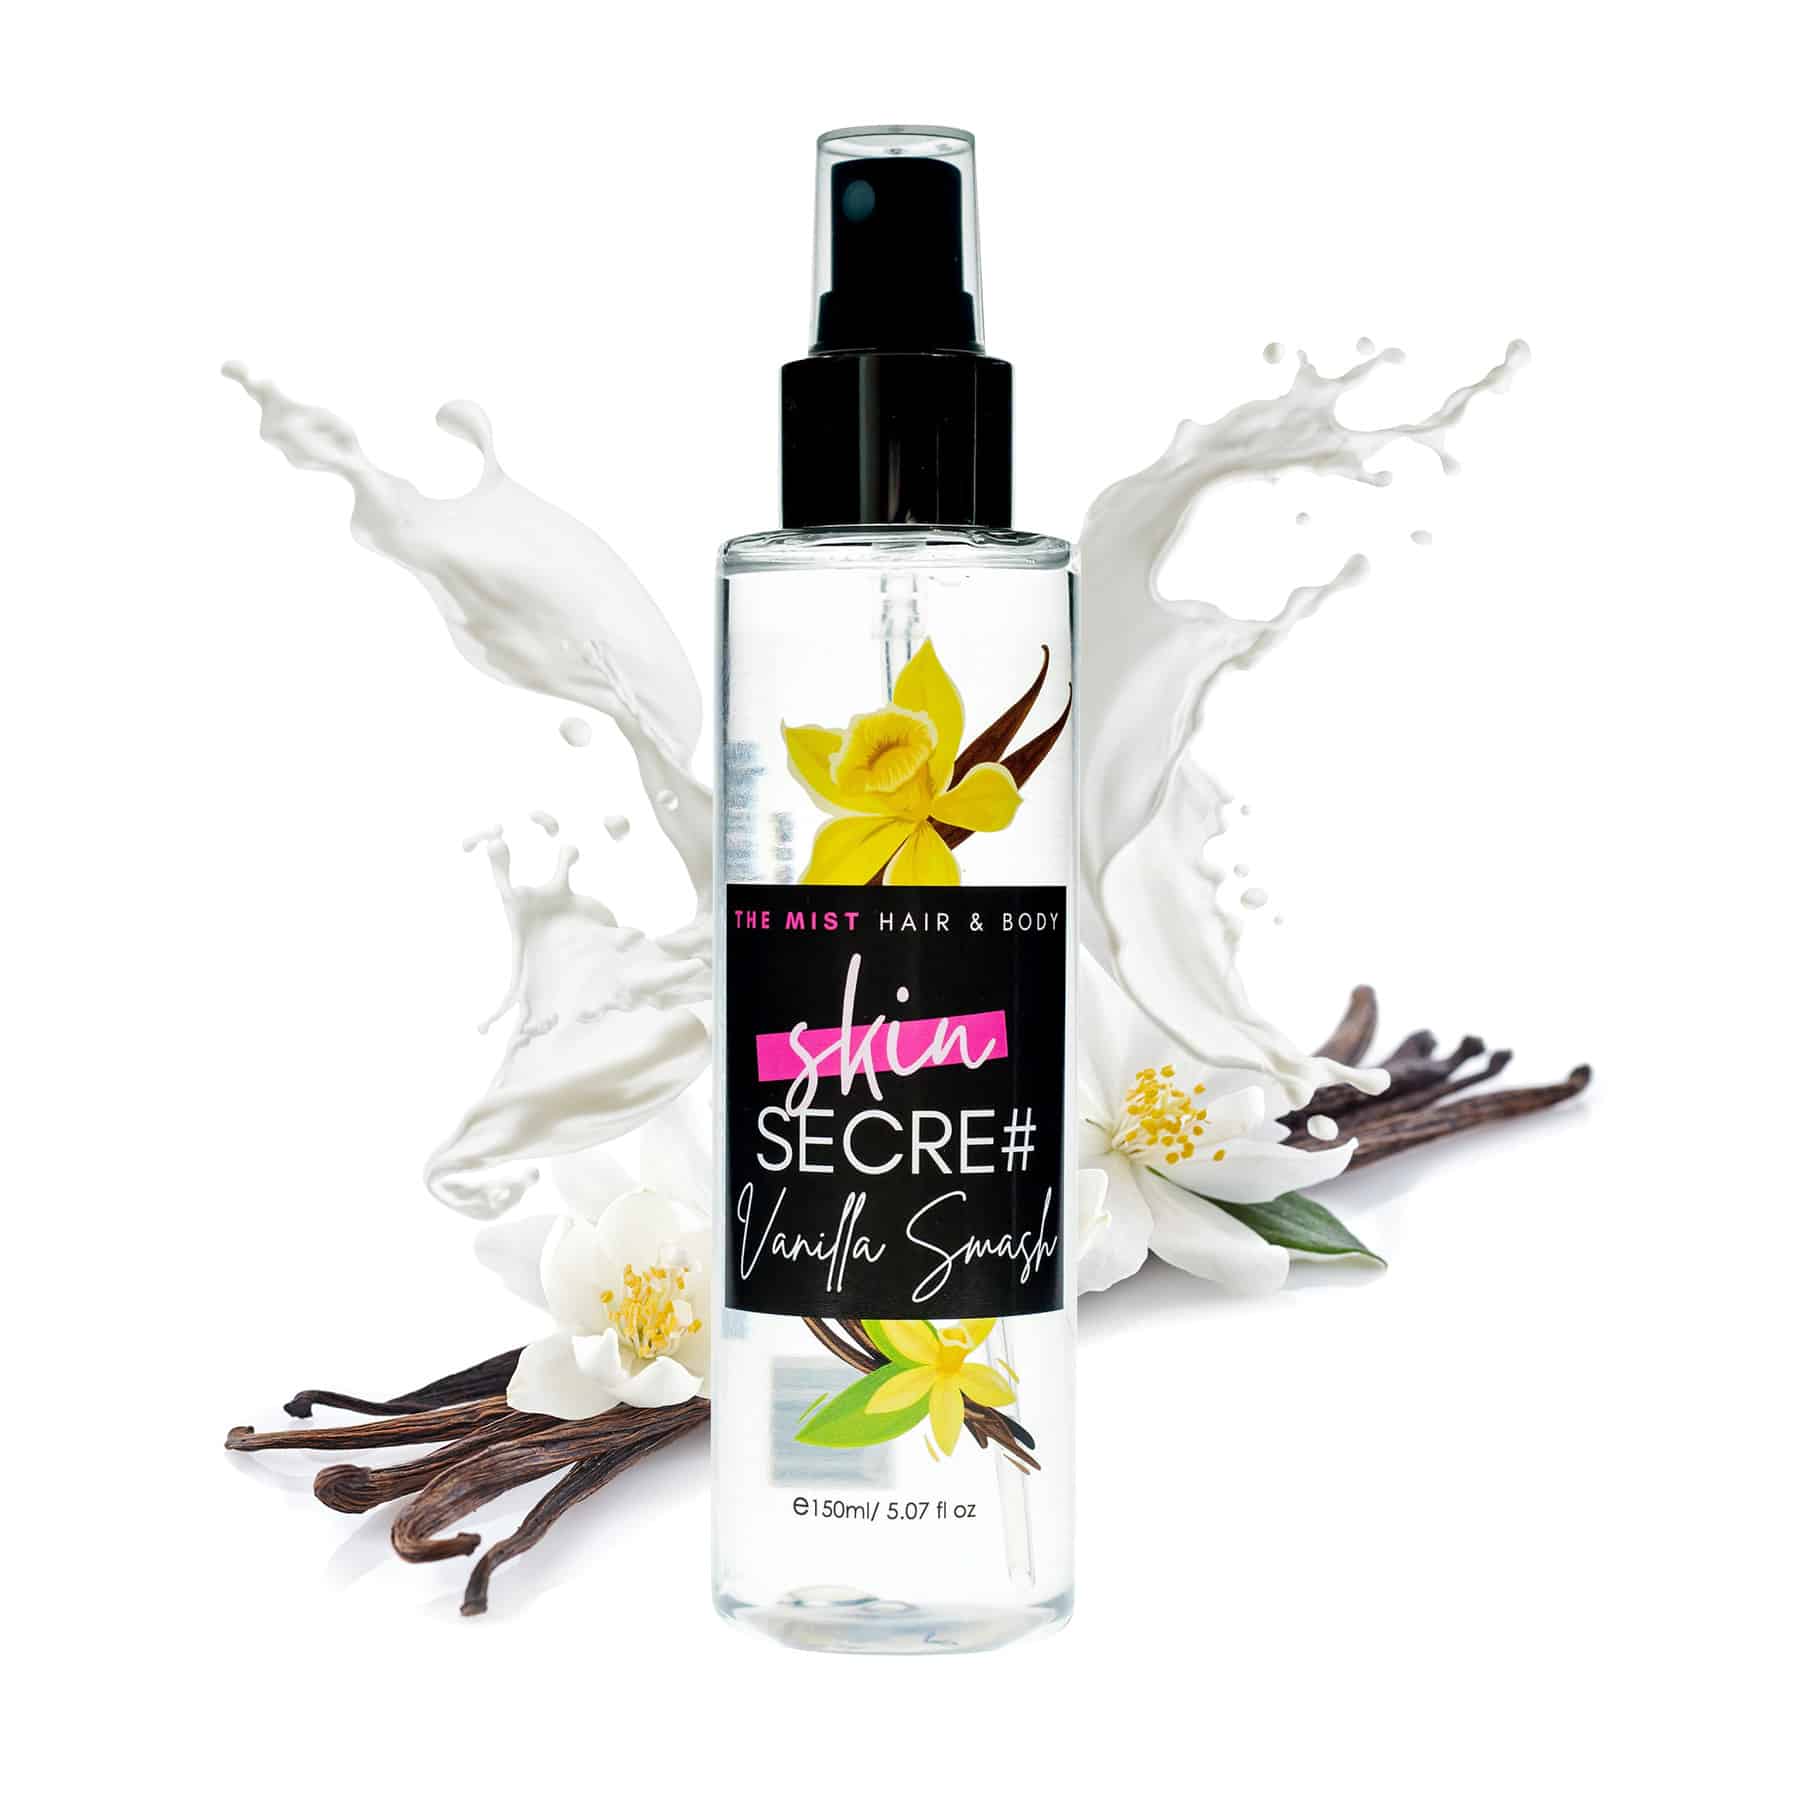 Skin Secret Body & Hair Mist “Vanilla Smash” 150ml